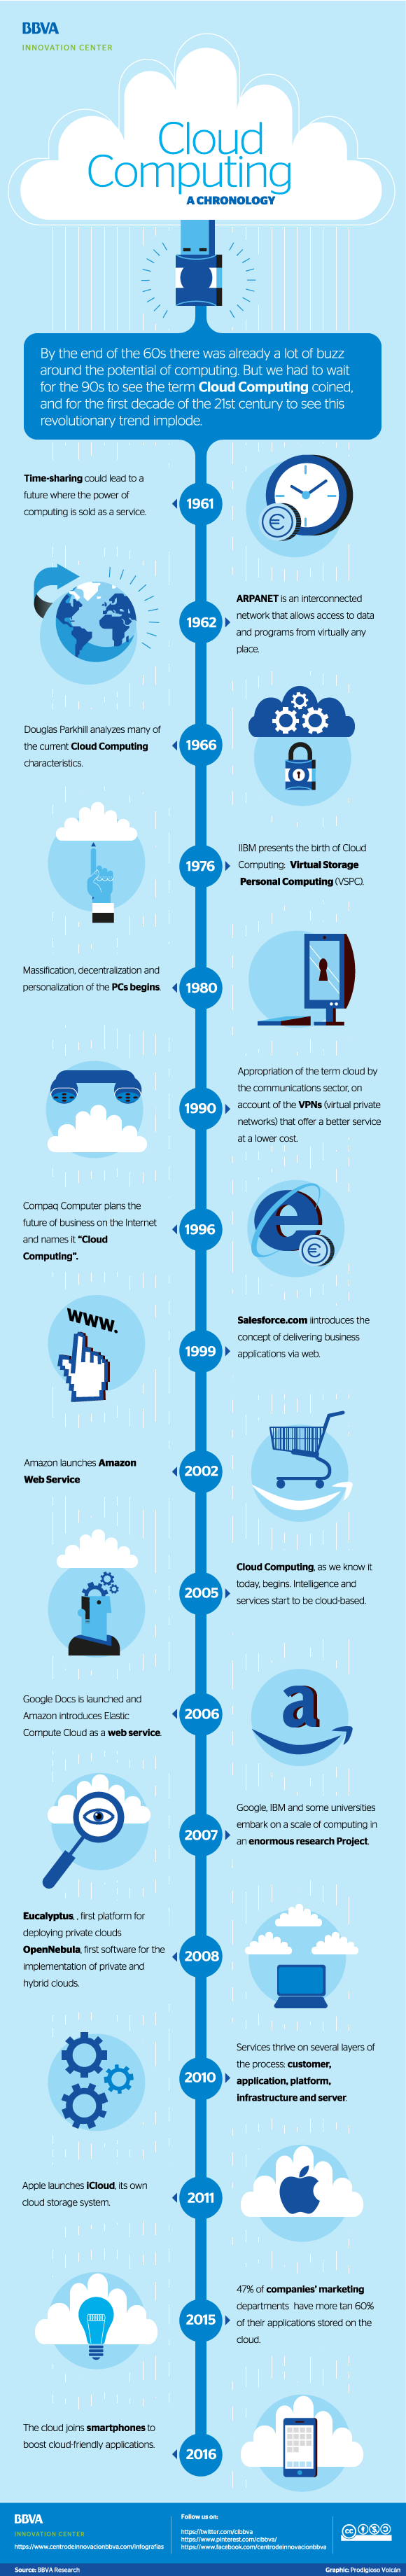 infographic-cibbva-chronology-cloud-computing-bbva